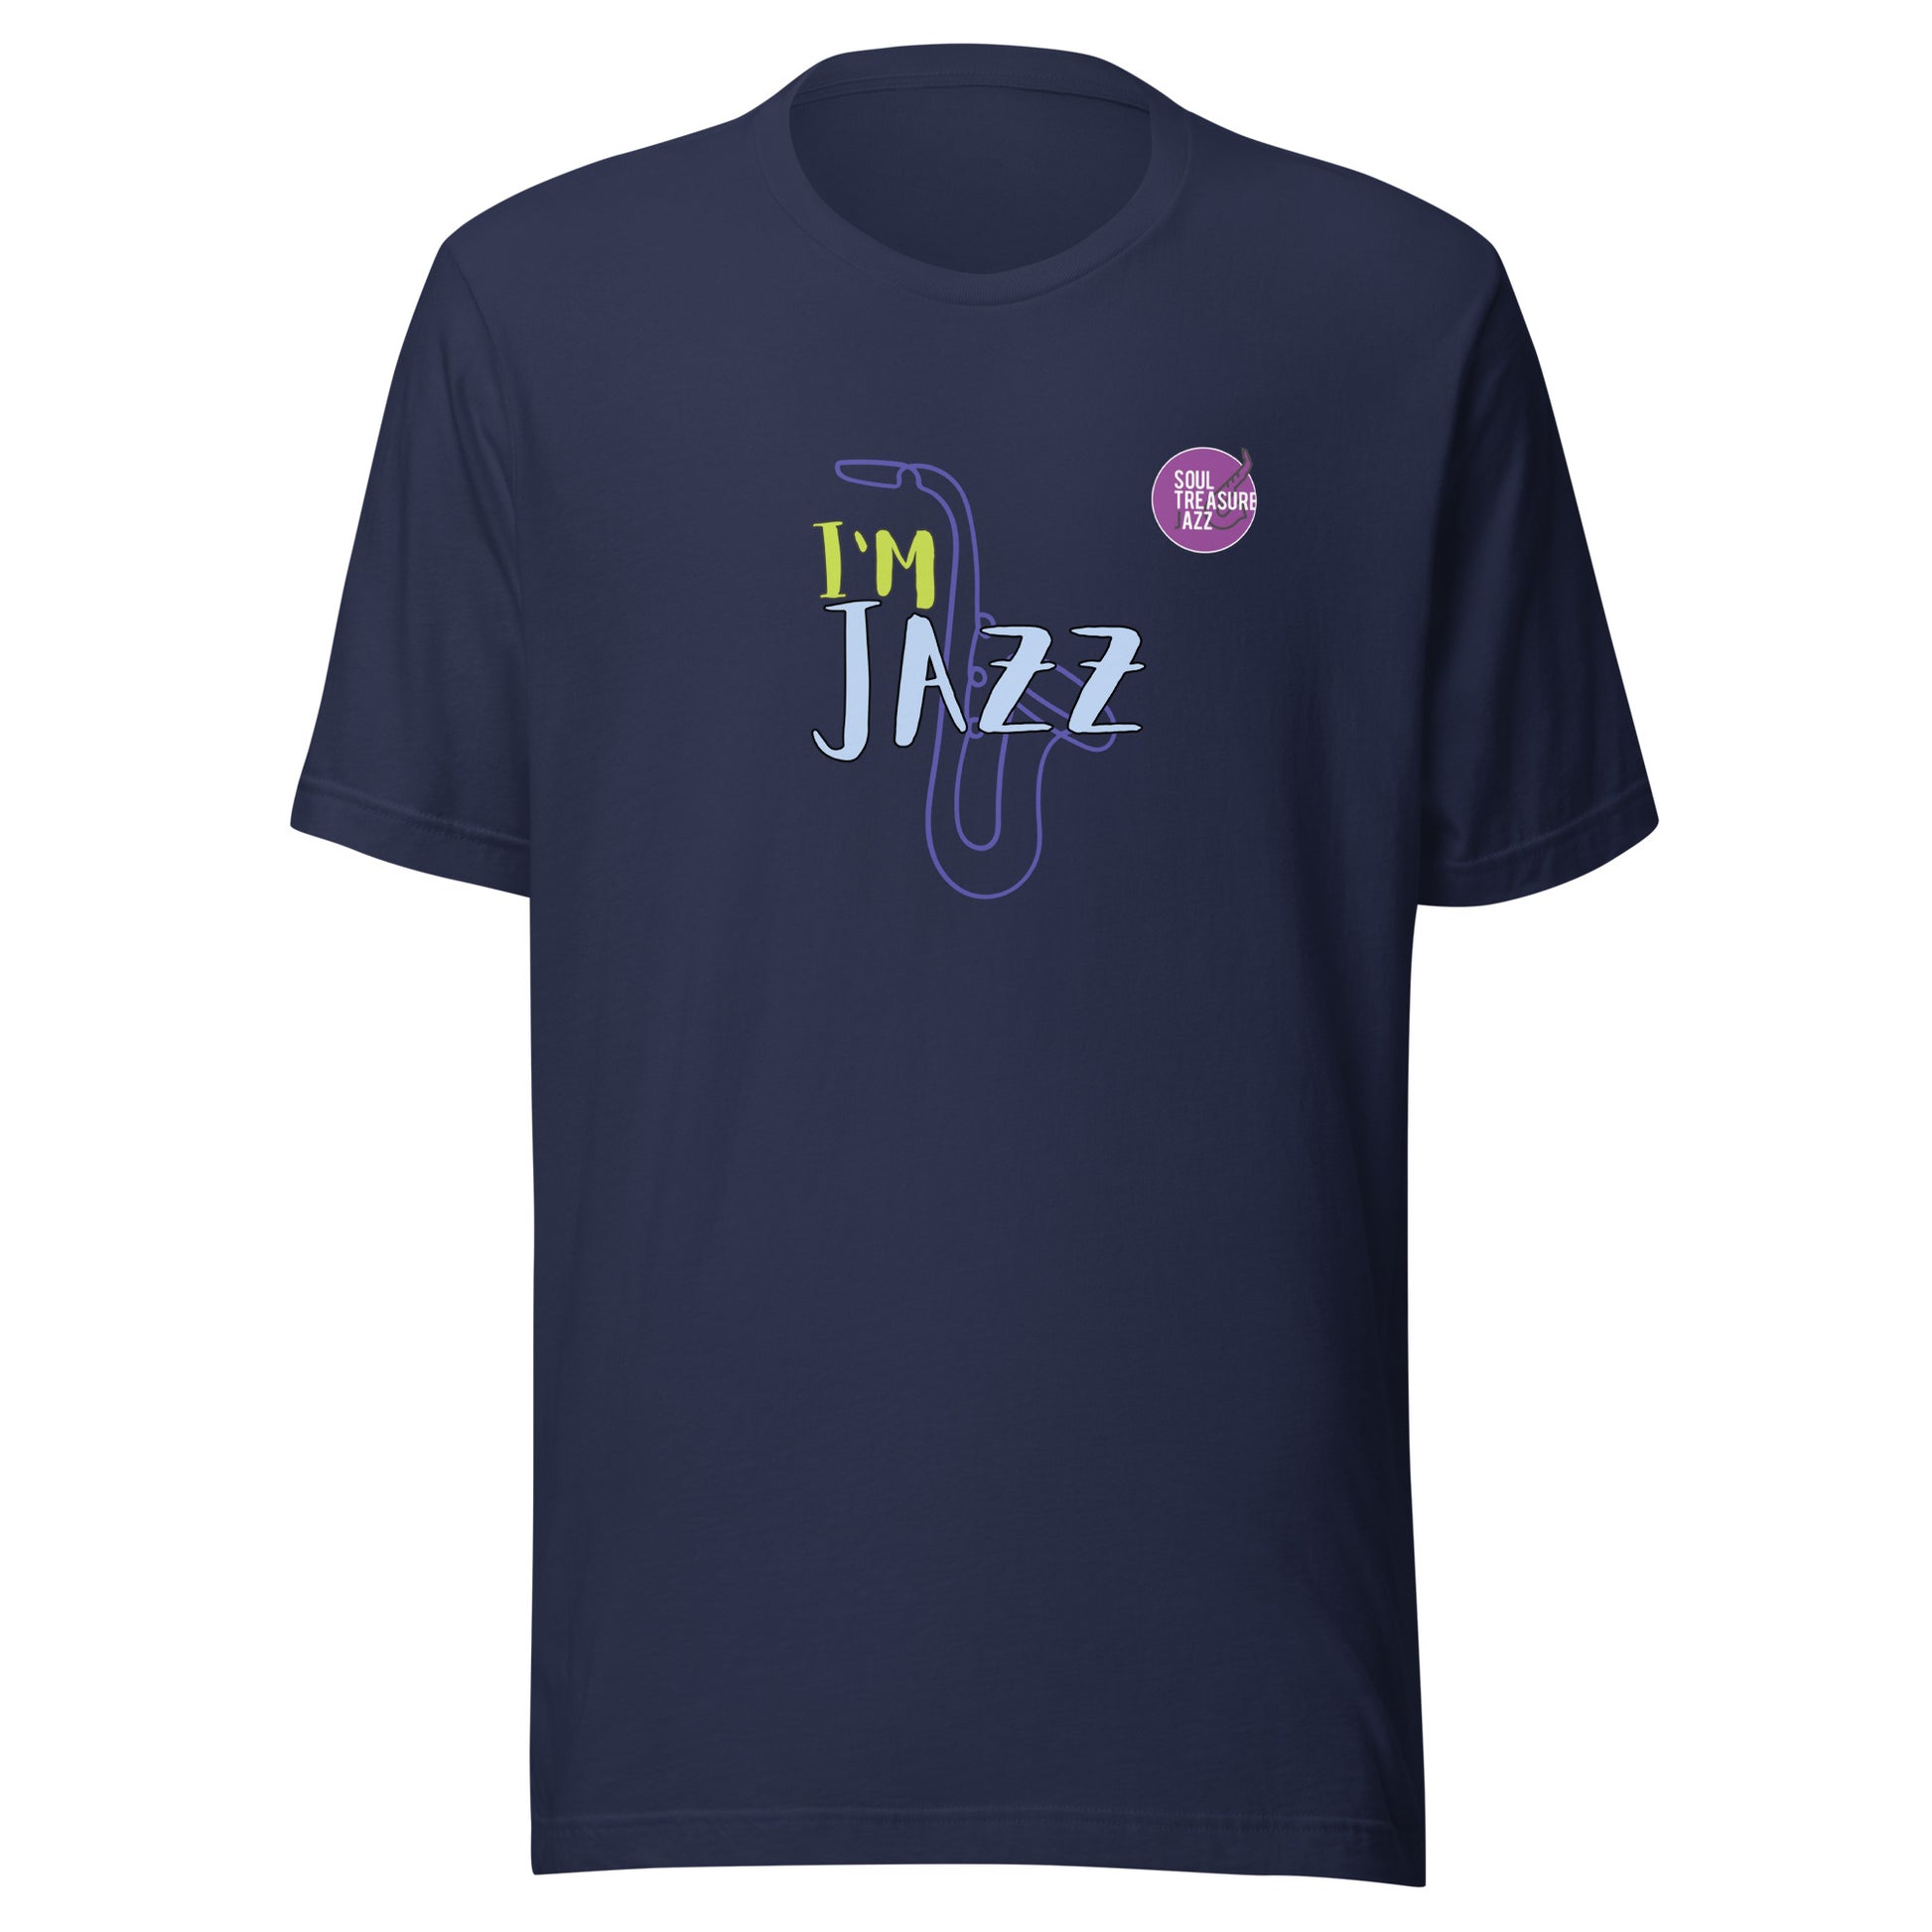 I'm Jazz Official T-Shirt